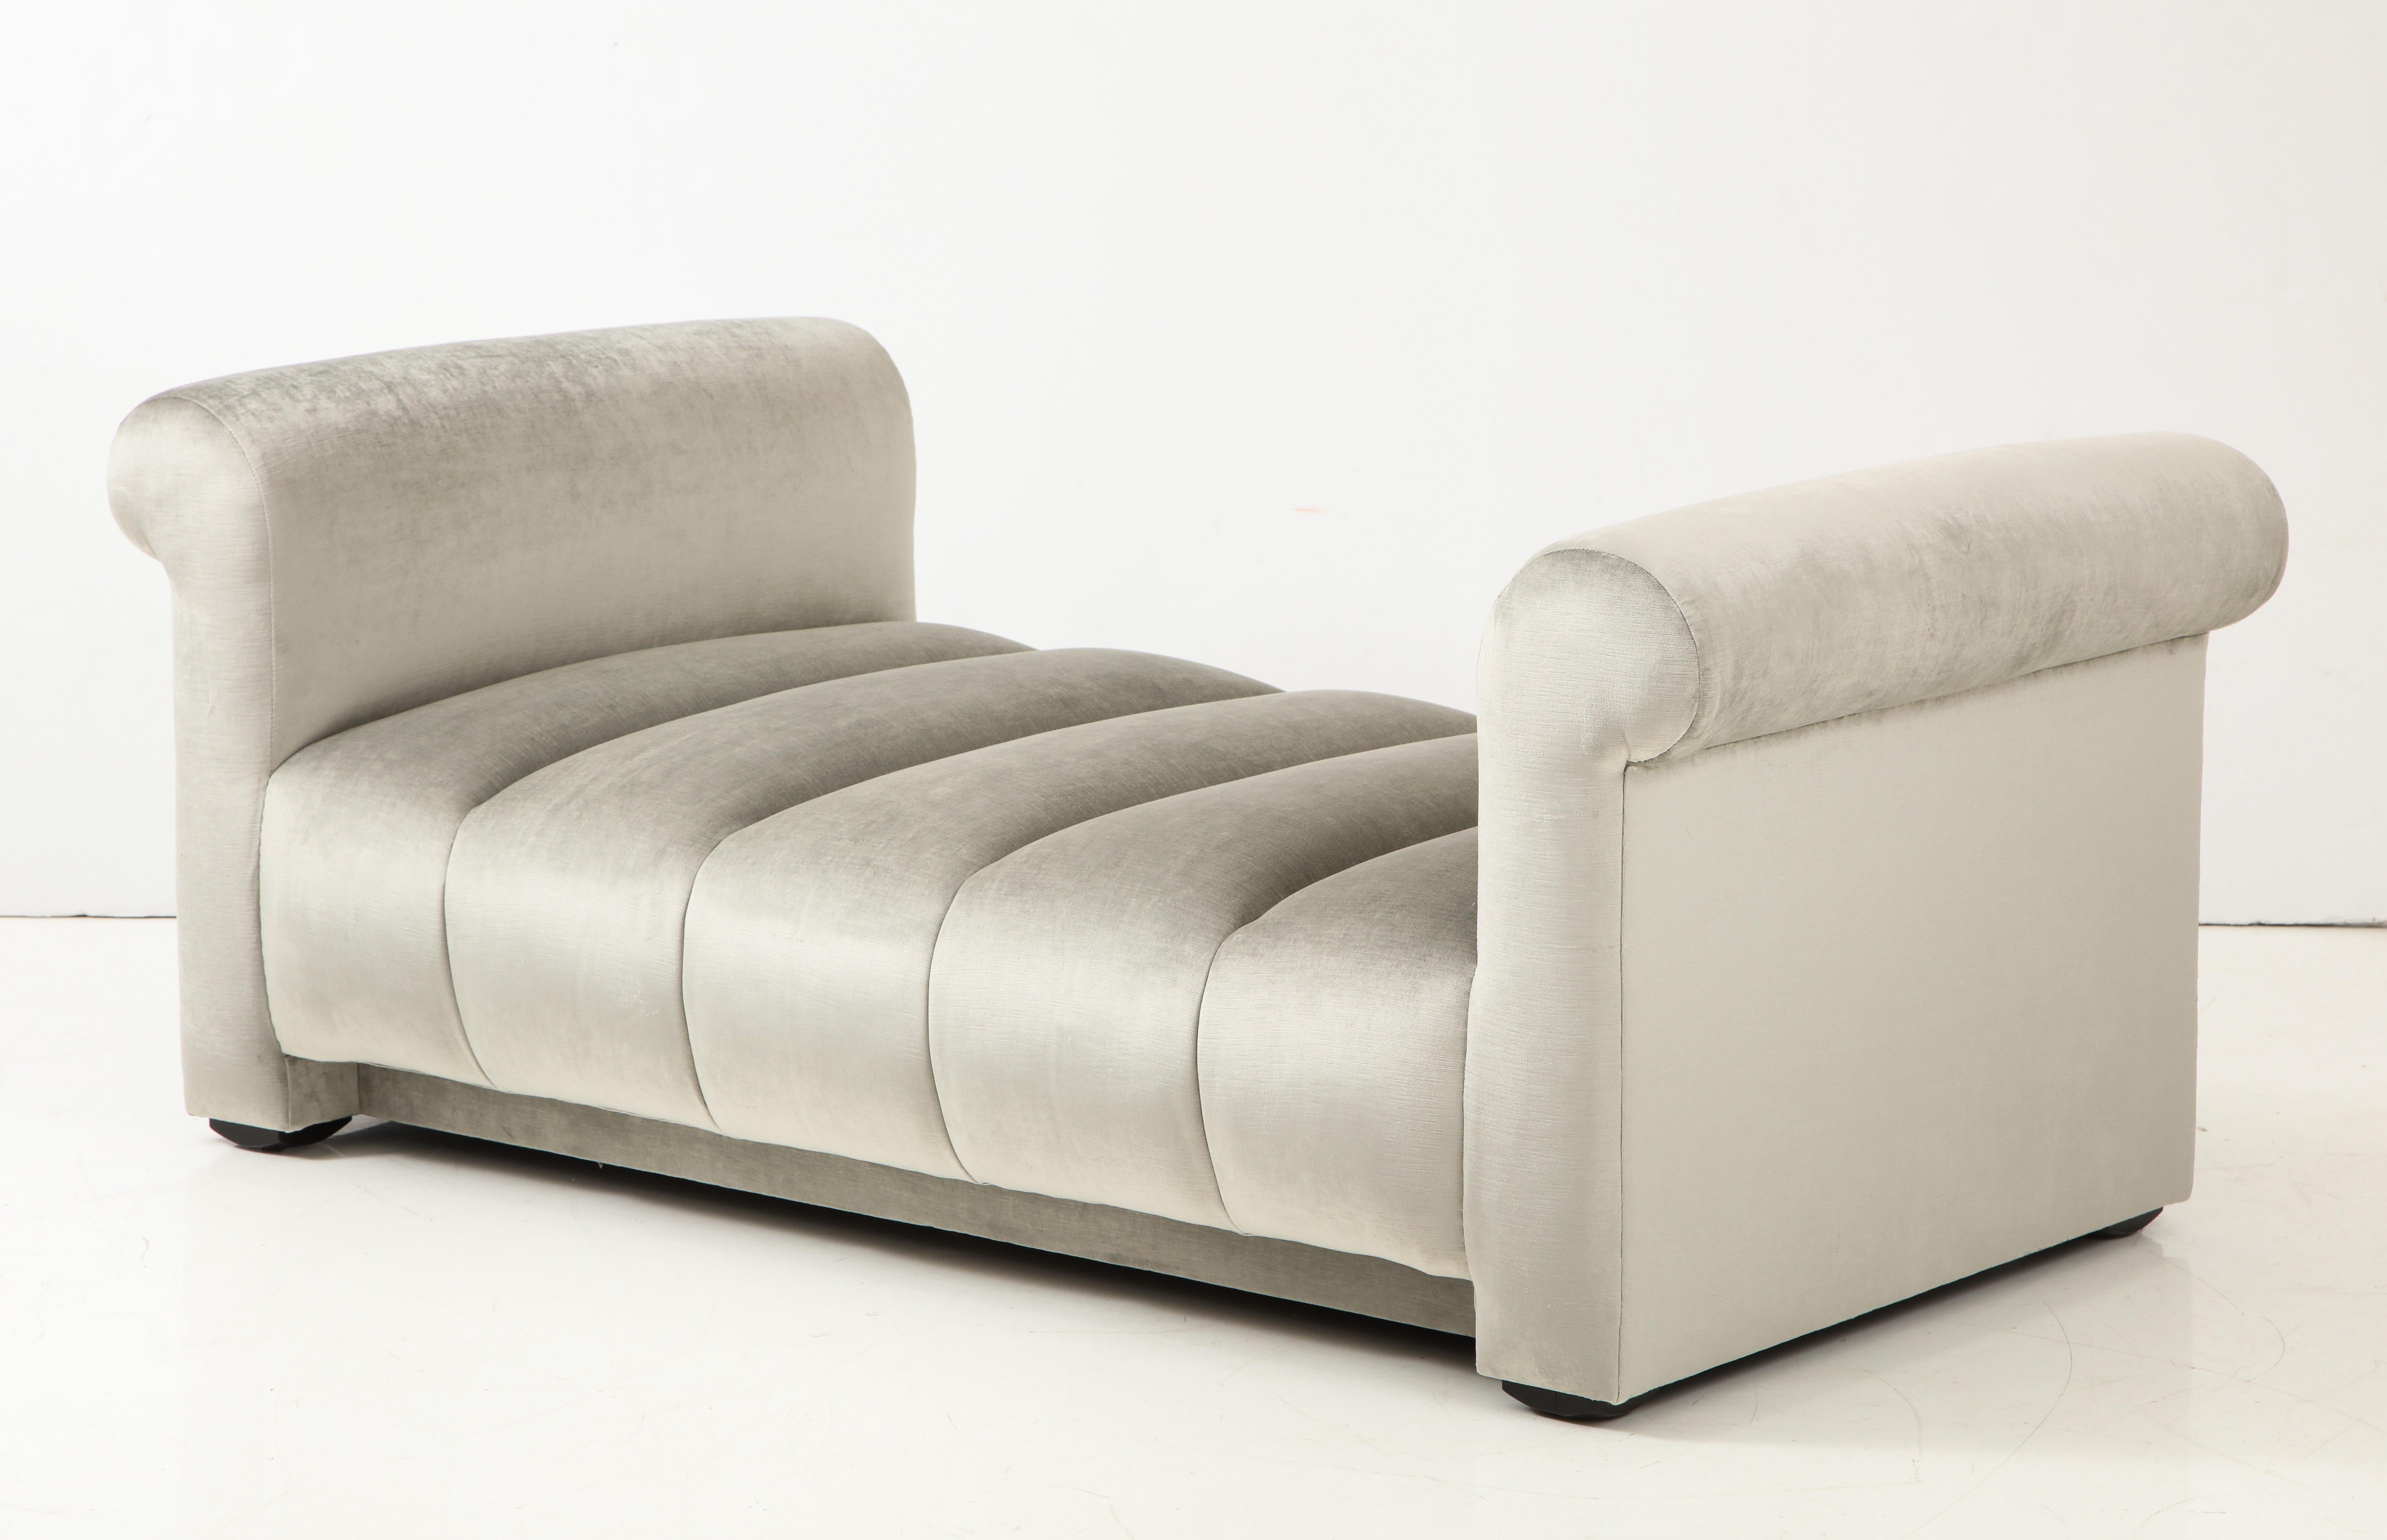 Custom Designed Chaise Lounge by Steve Chase (amerikanisch)